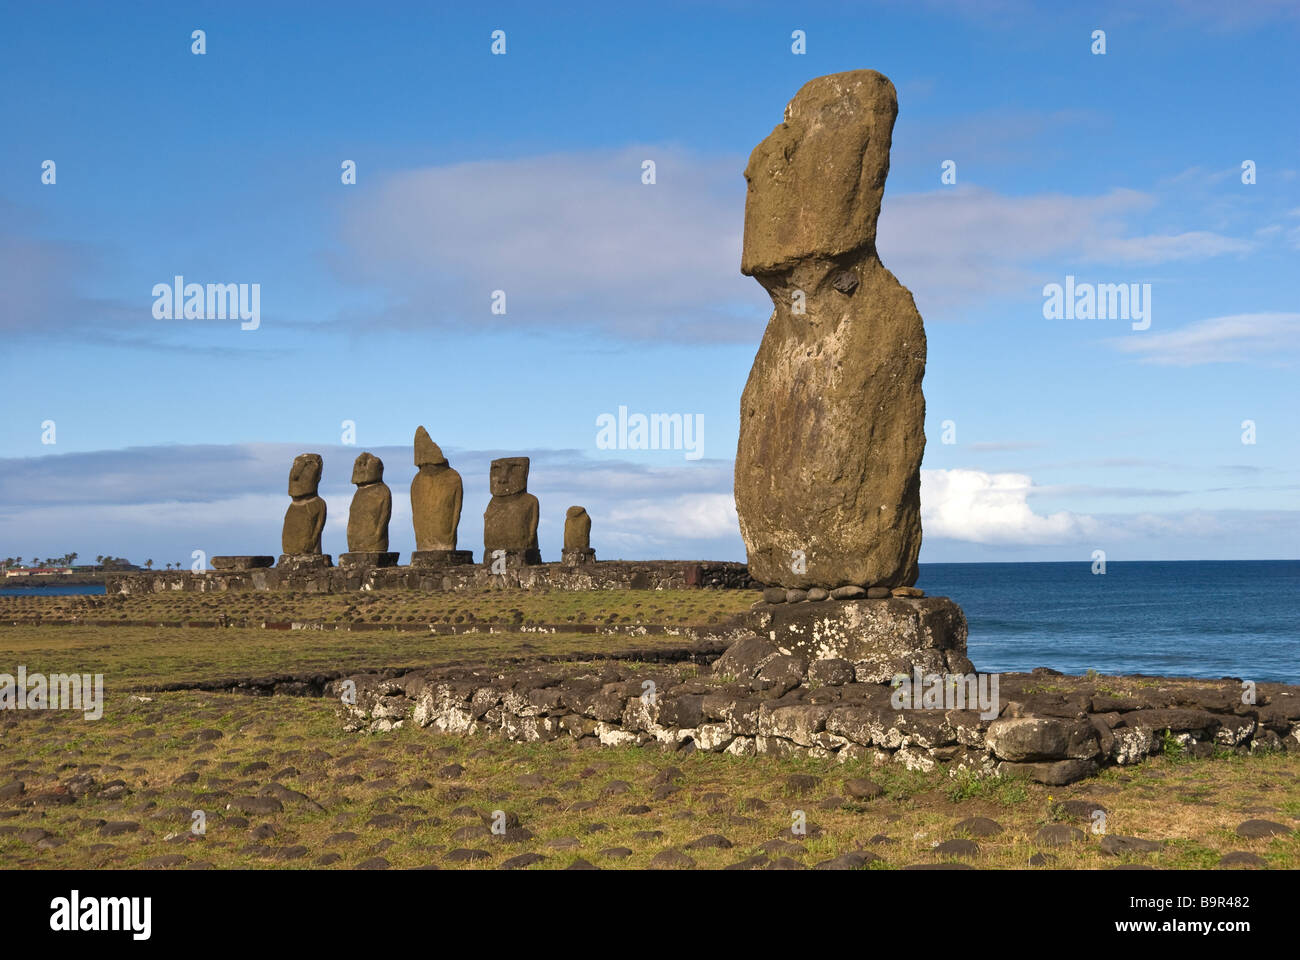 Elk198 5087 Cile Isola di Pasqua Hanga Roa Ahu Vai Uri moai statue Foto Stock